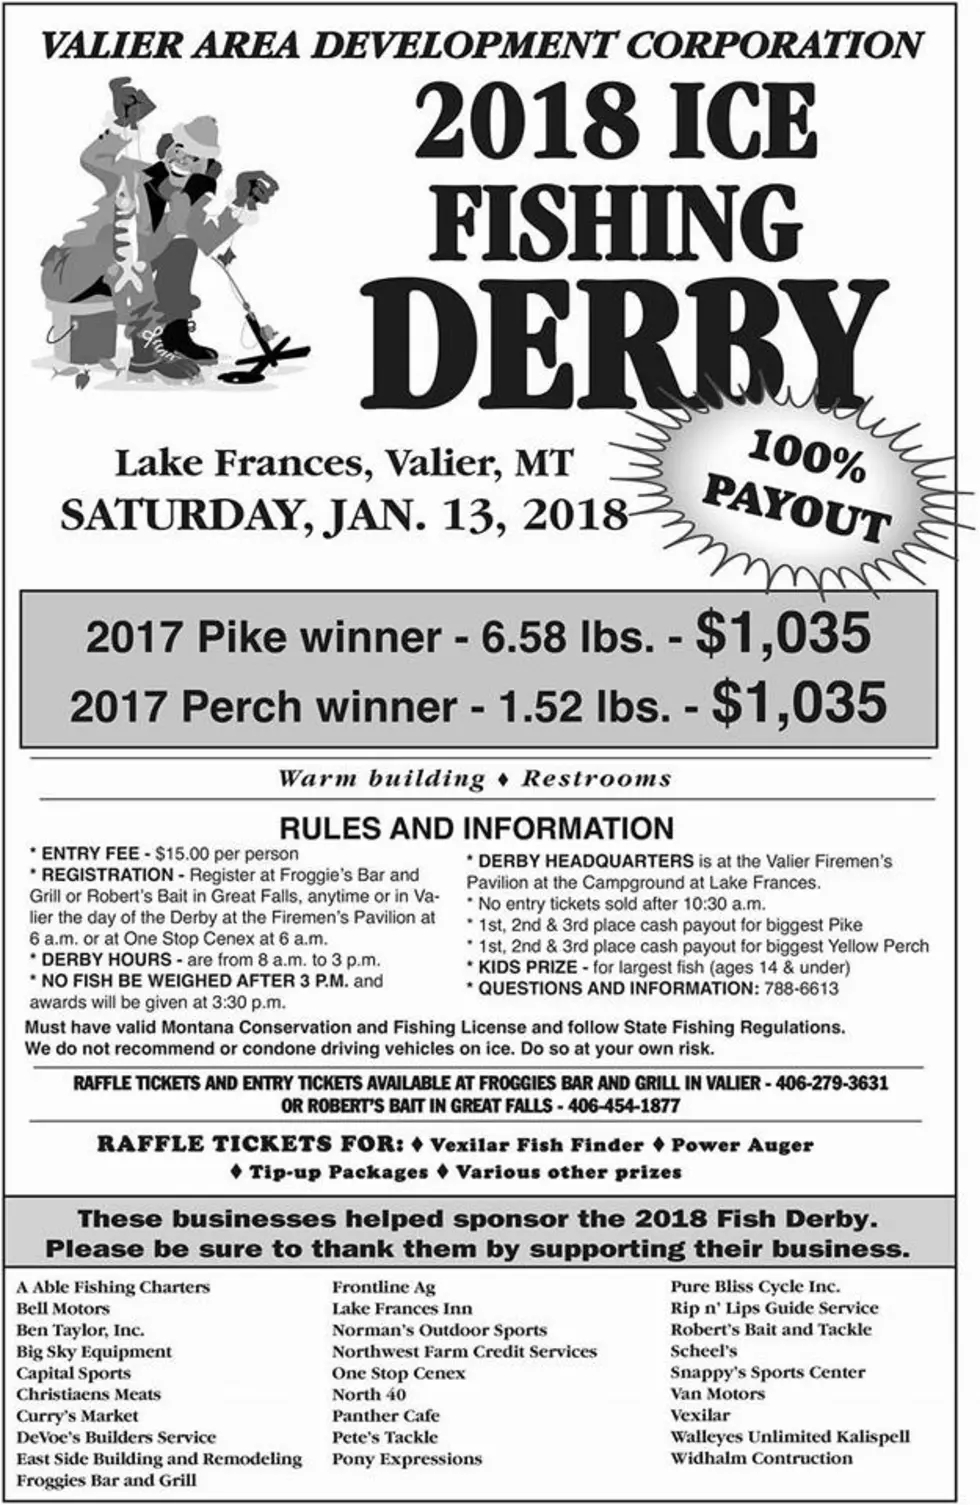 Valier Area Development Corporation Ice Fishing Derby